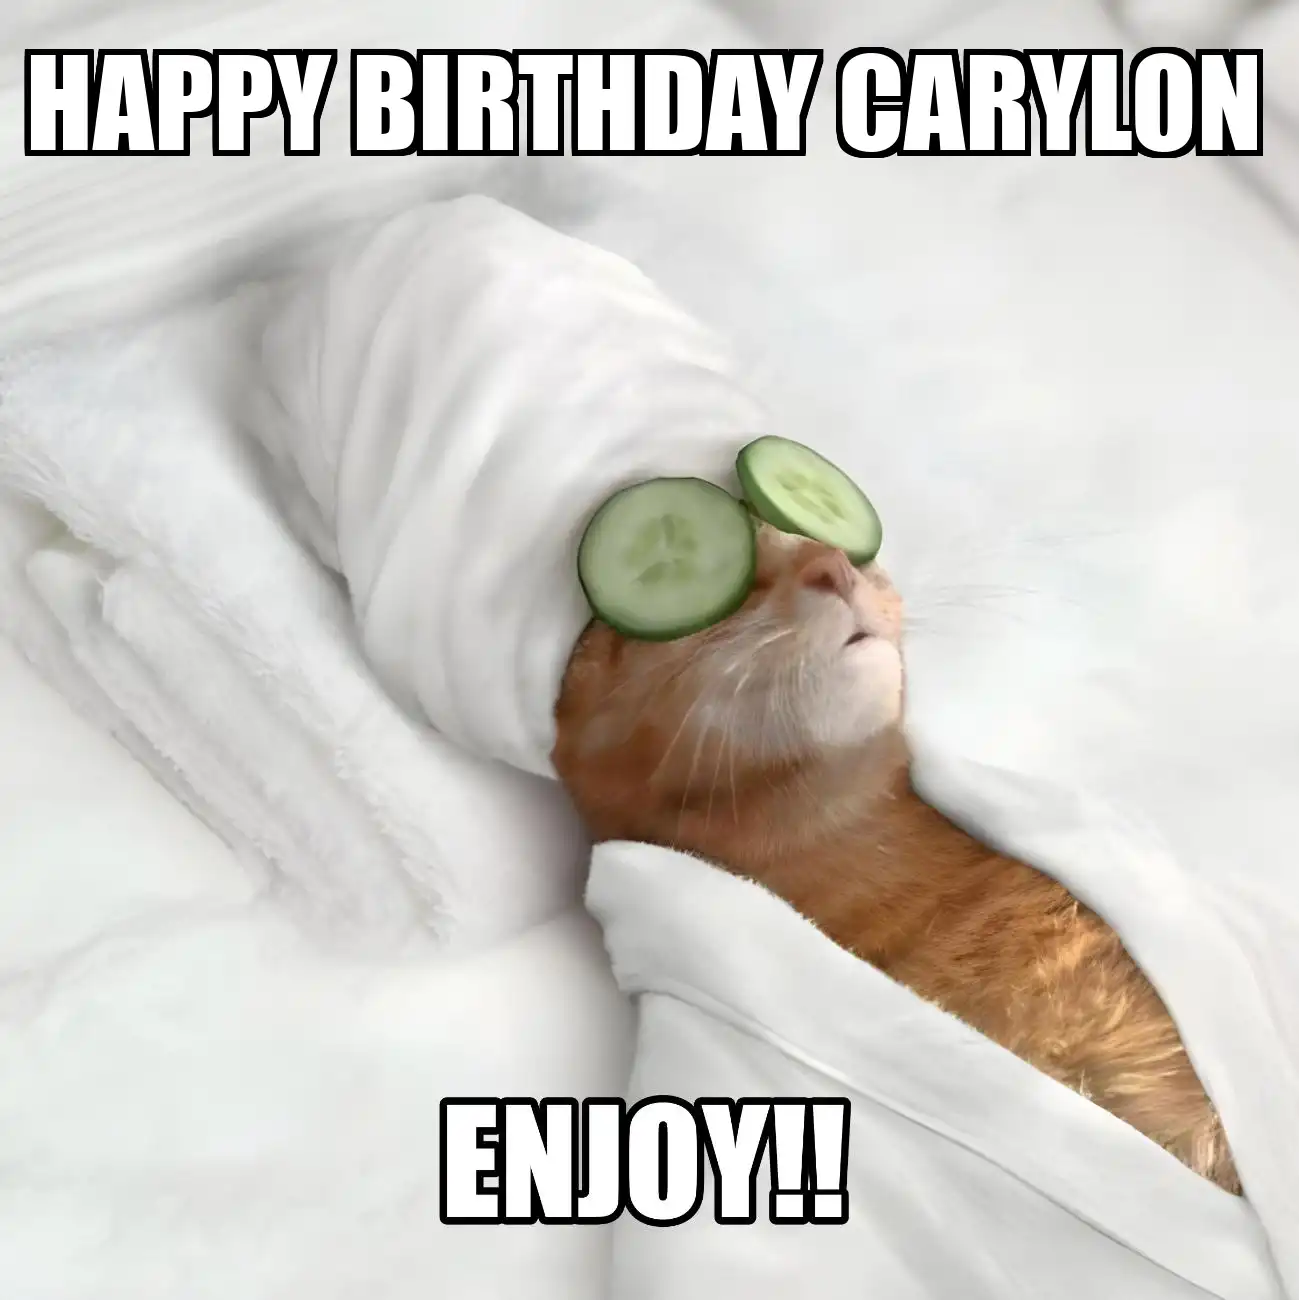 Happy Birthday Carylon Enjoy Cat Meme